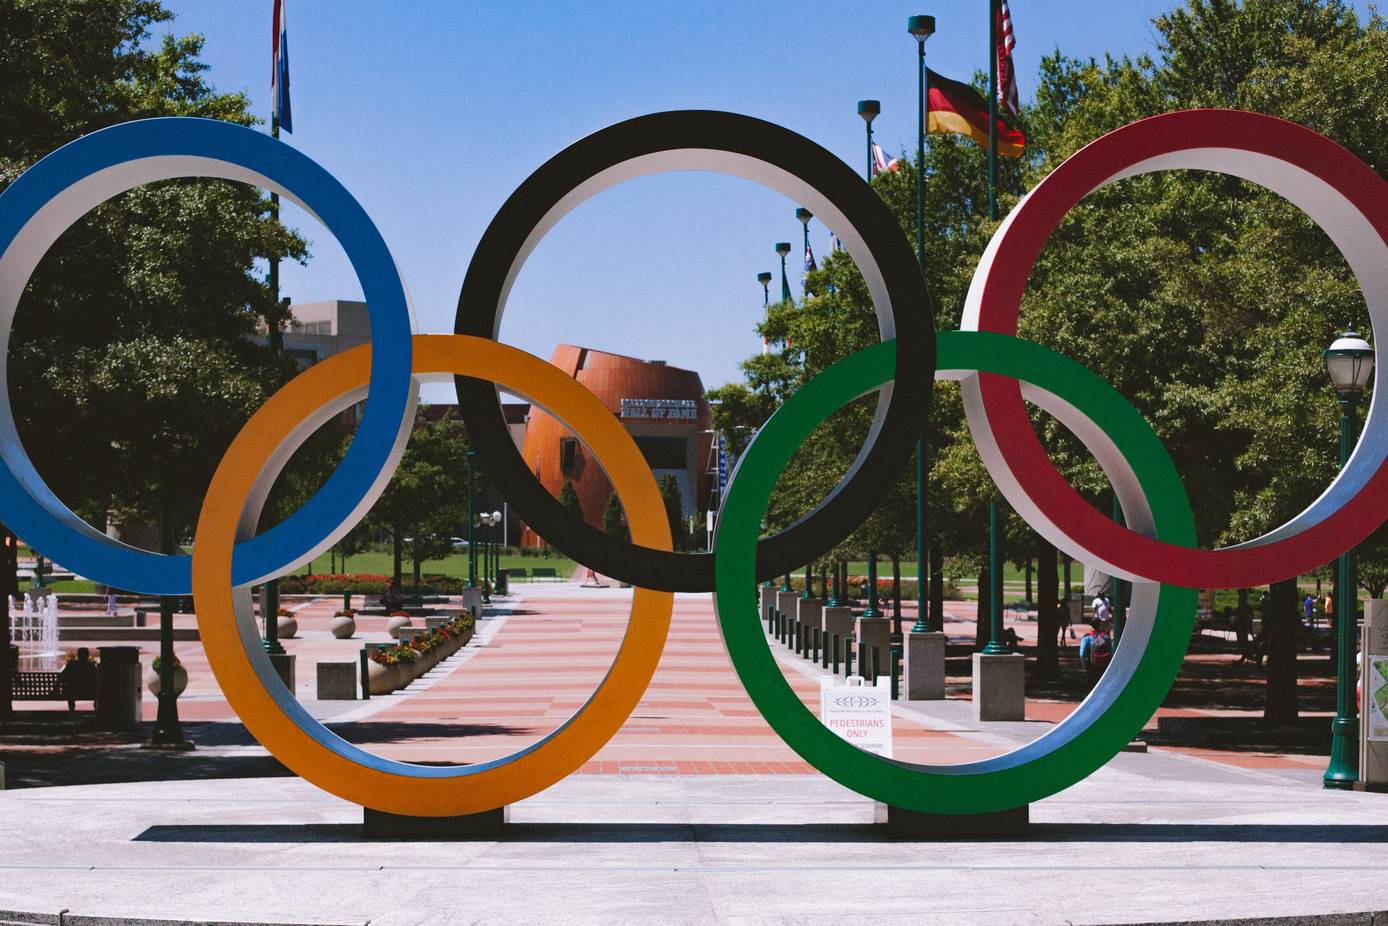 Paris Olympics 2024: LVMH Becomes Premium Sponsor